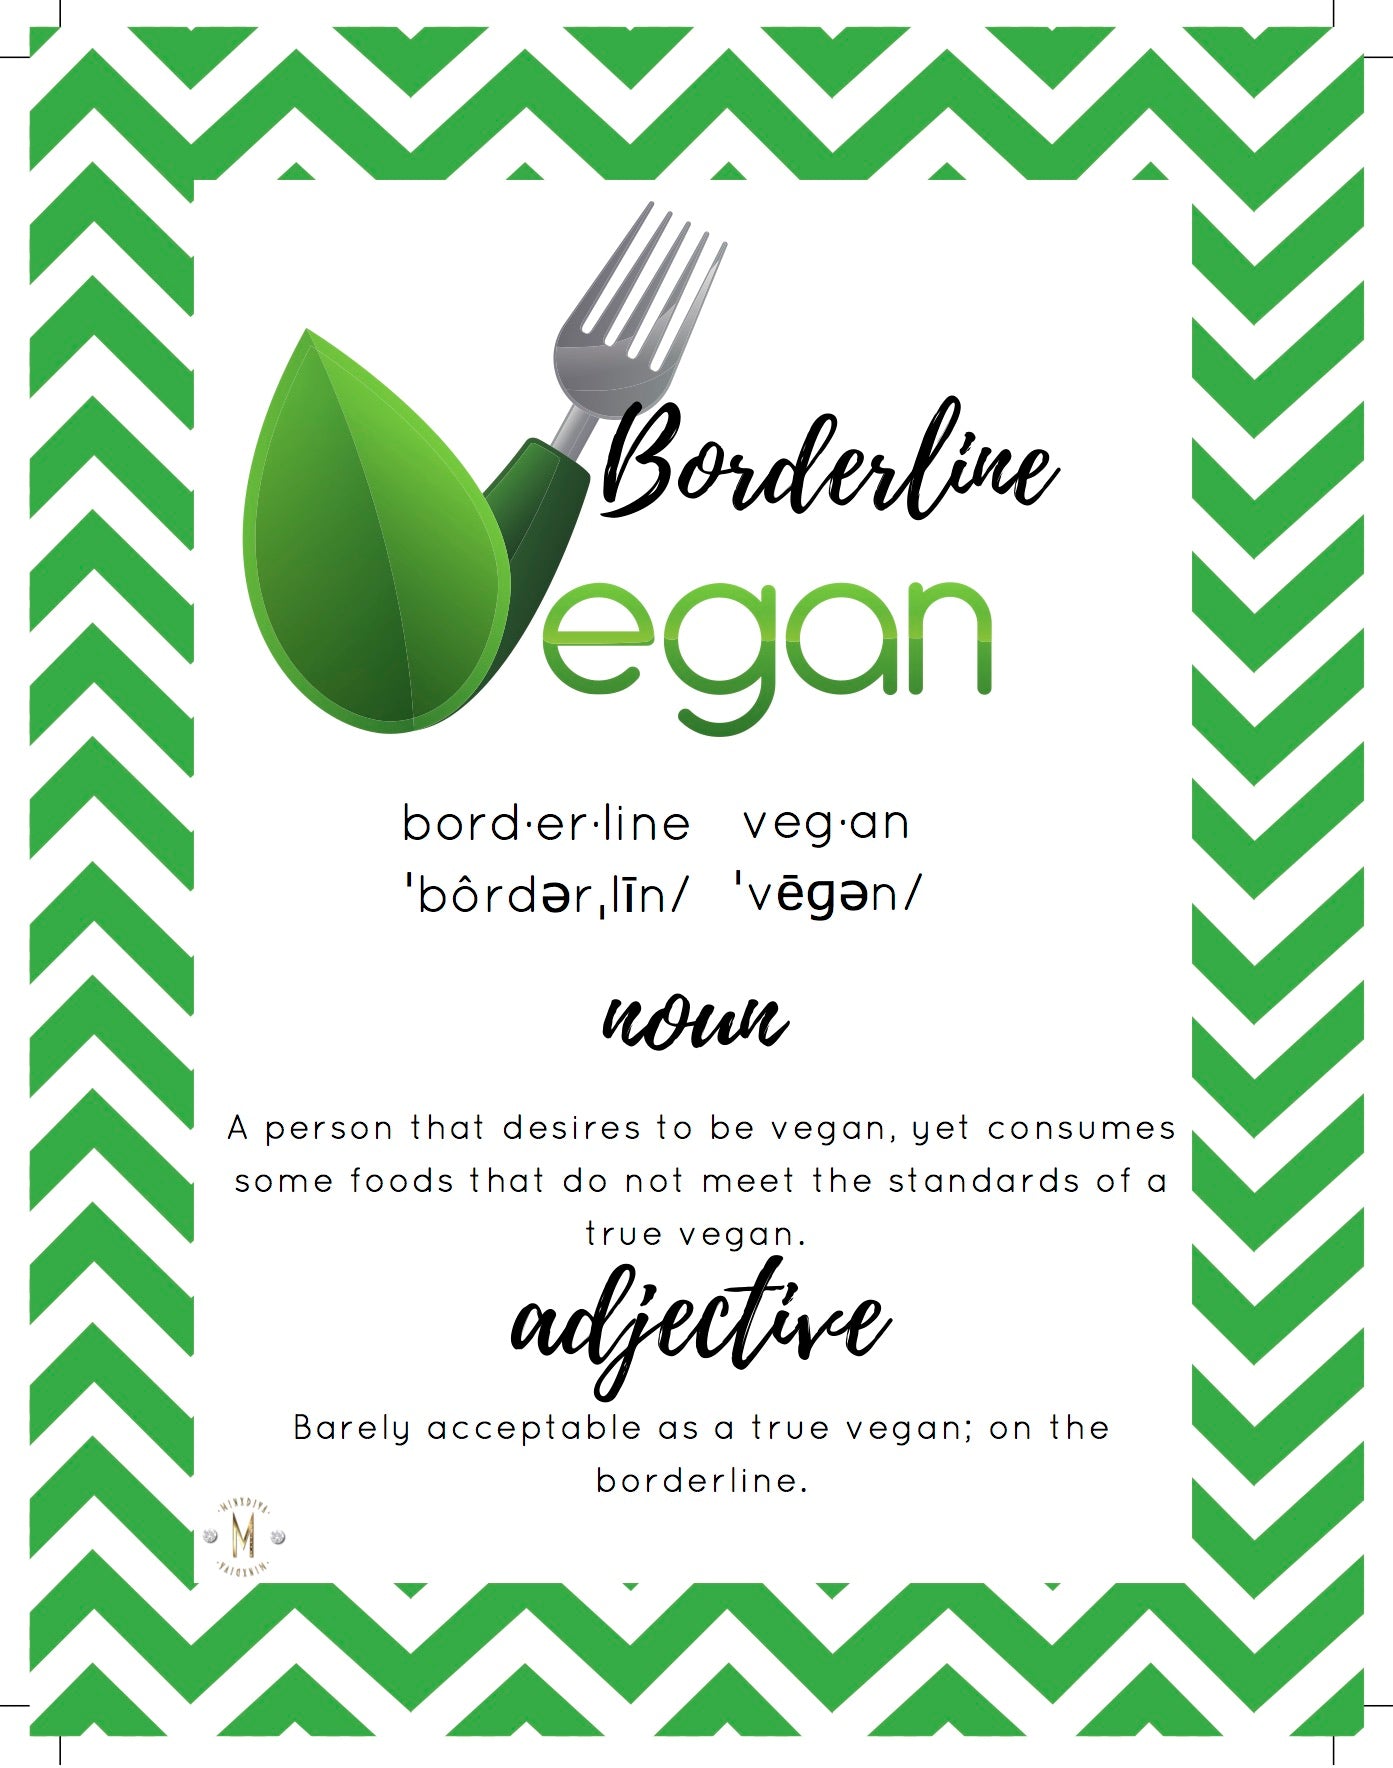 The Borderline Vegan Meal Planning Guide